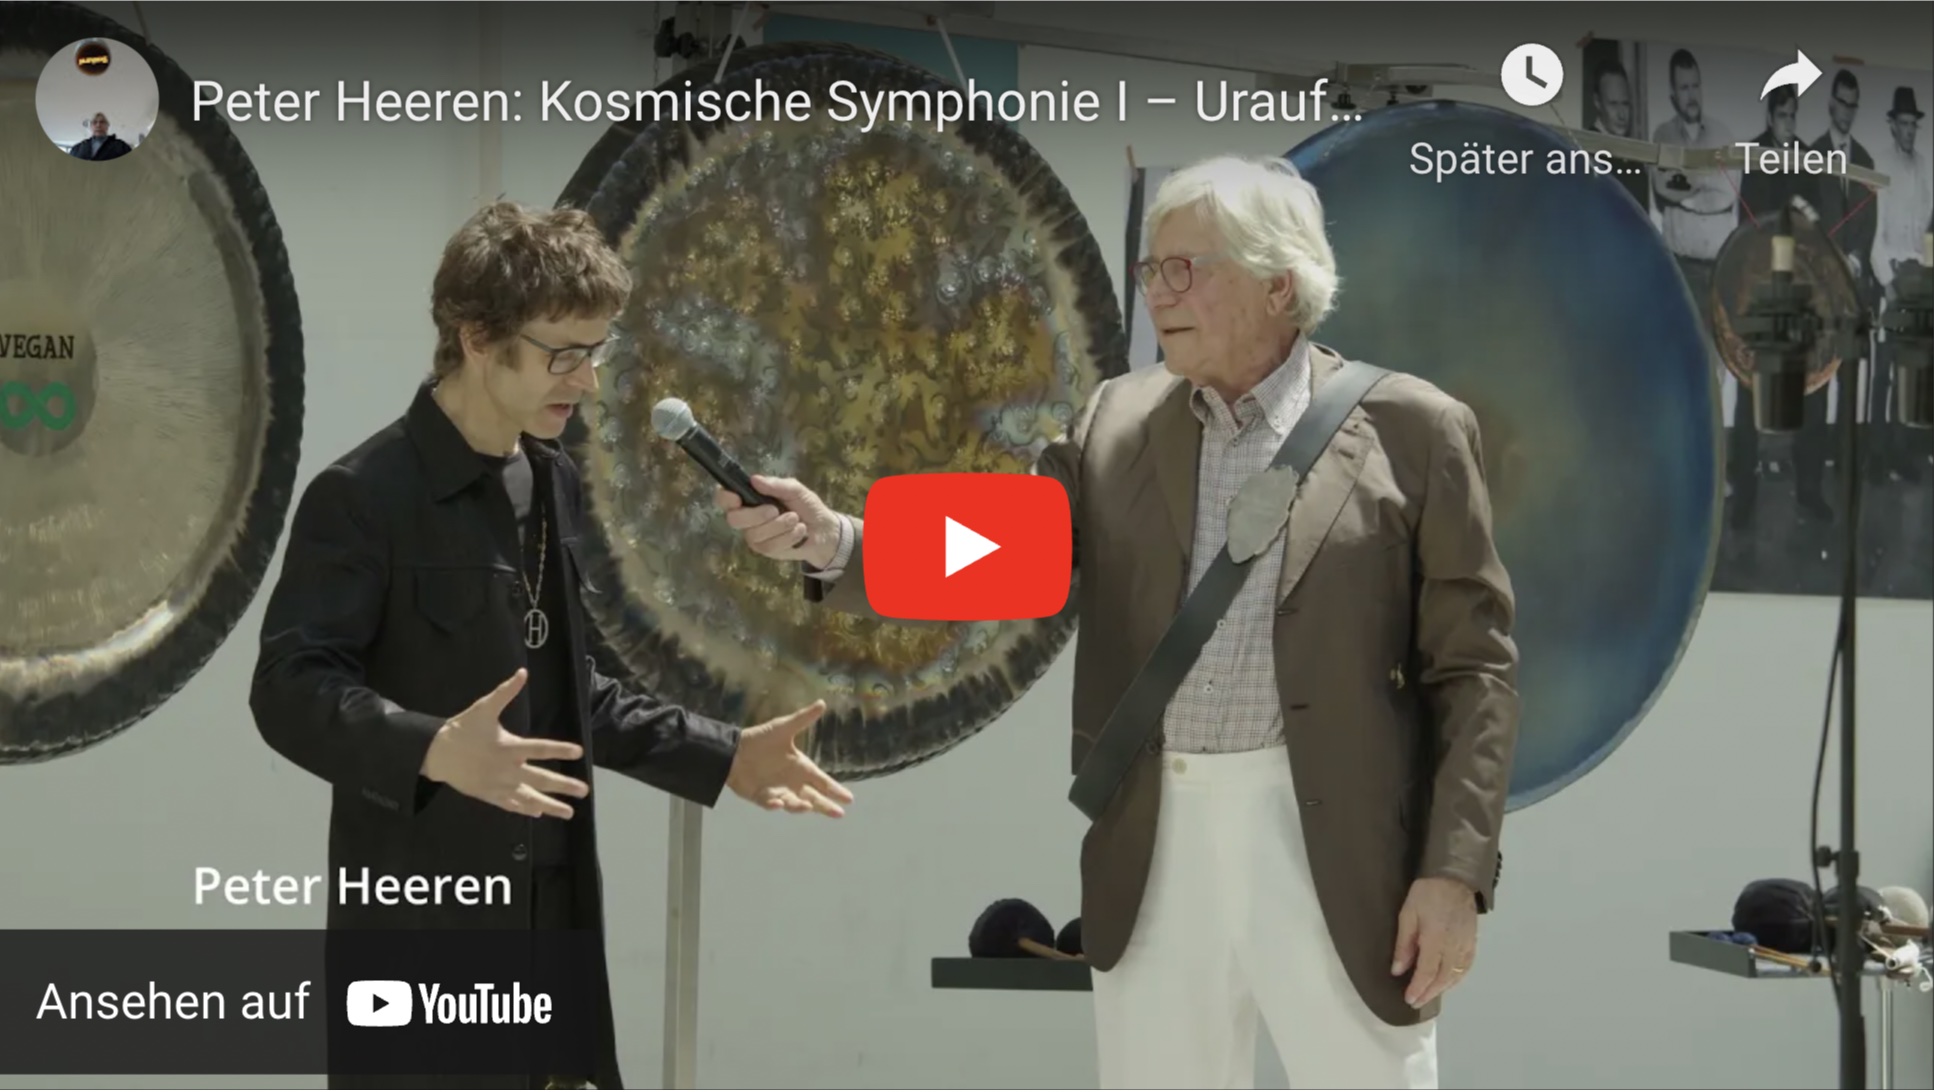 Peter Heeren: „Kosmische Symphonie“ – Uraufführung im Urton